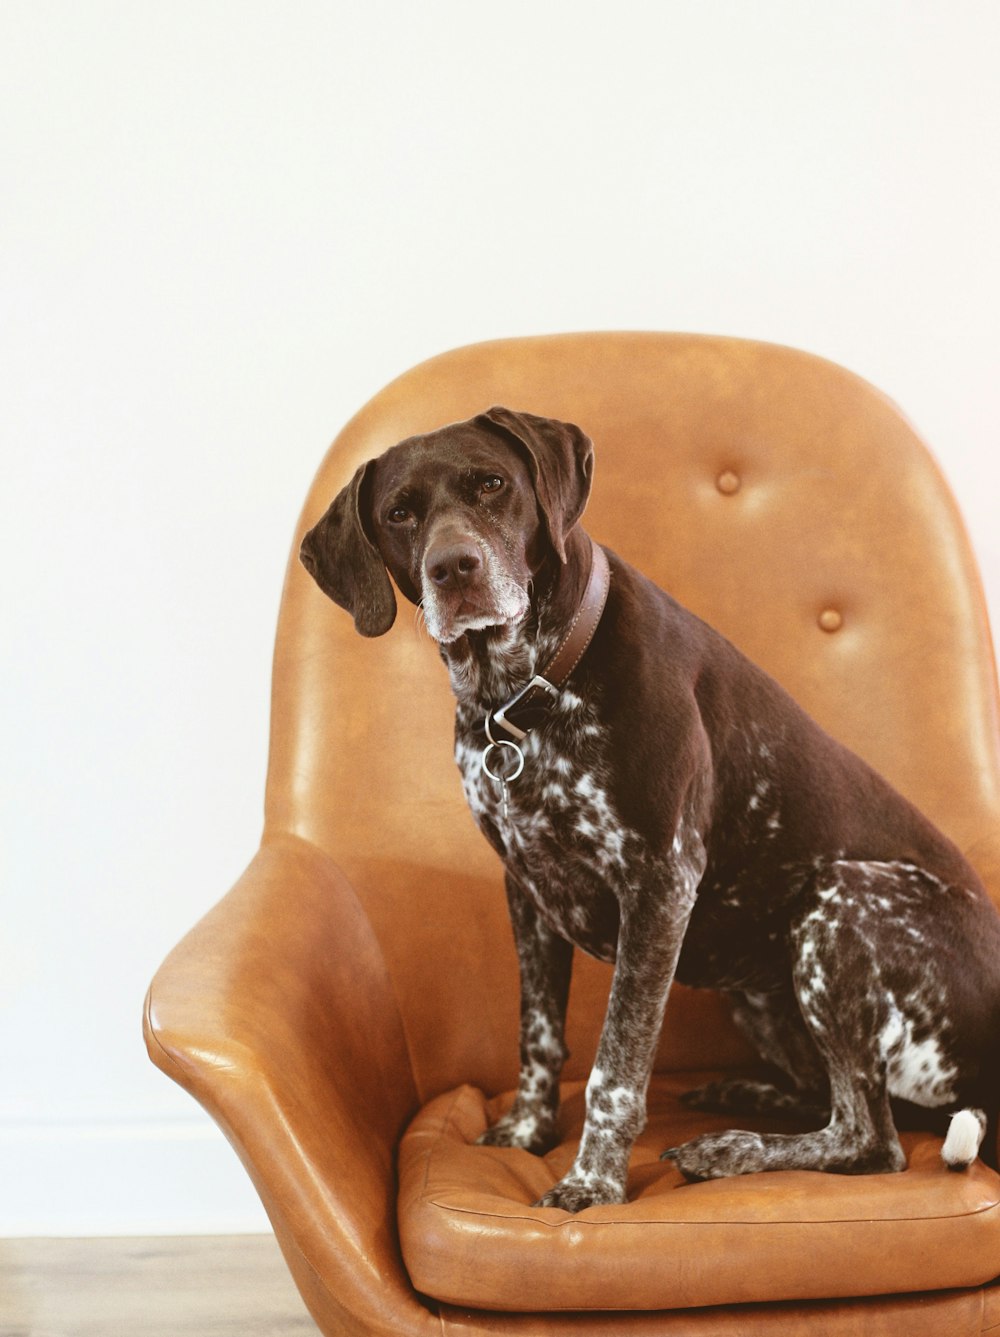 short-coated black and white dog on orange leather armchair